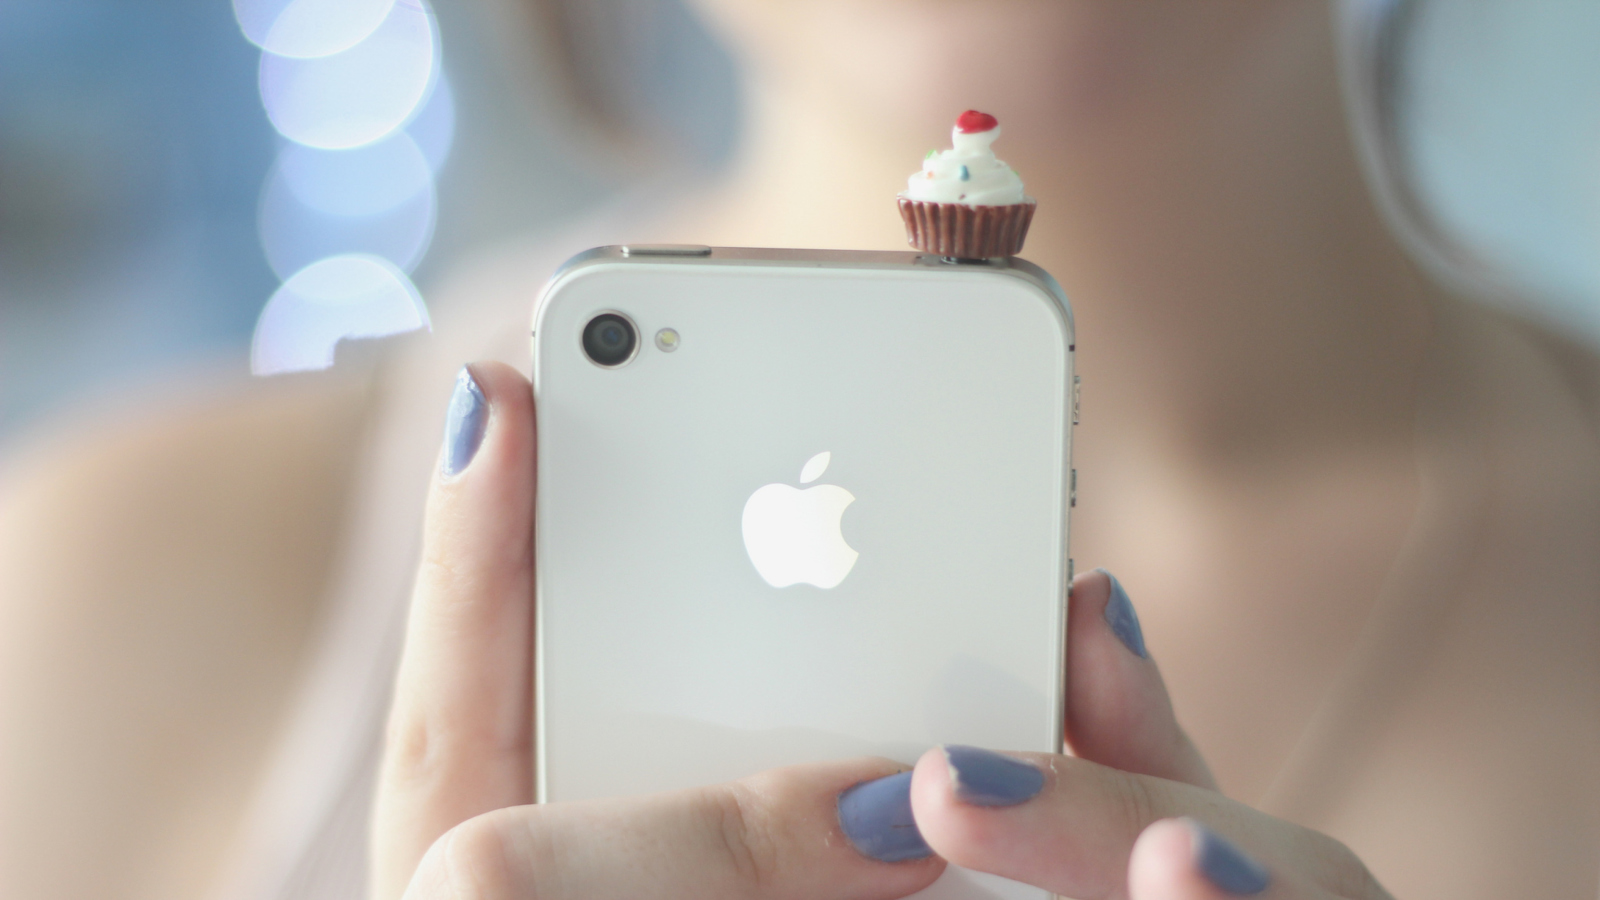 Das Cupcake Iphone Wallpaper 1600x900